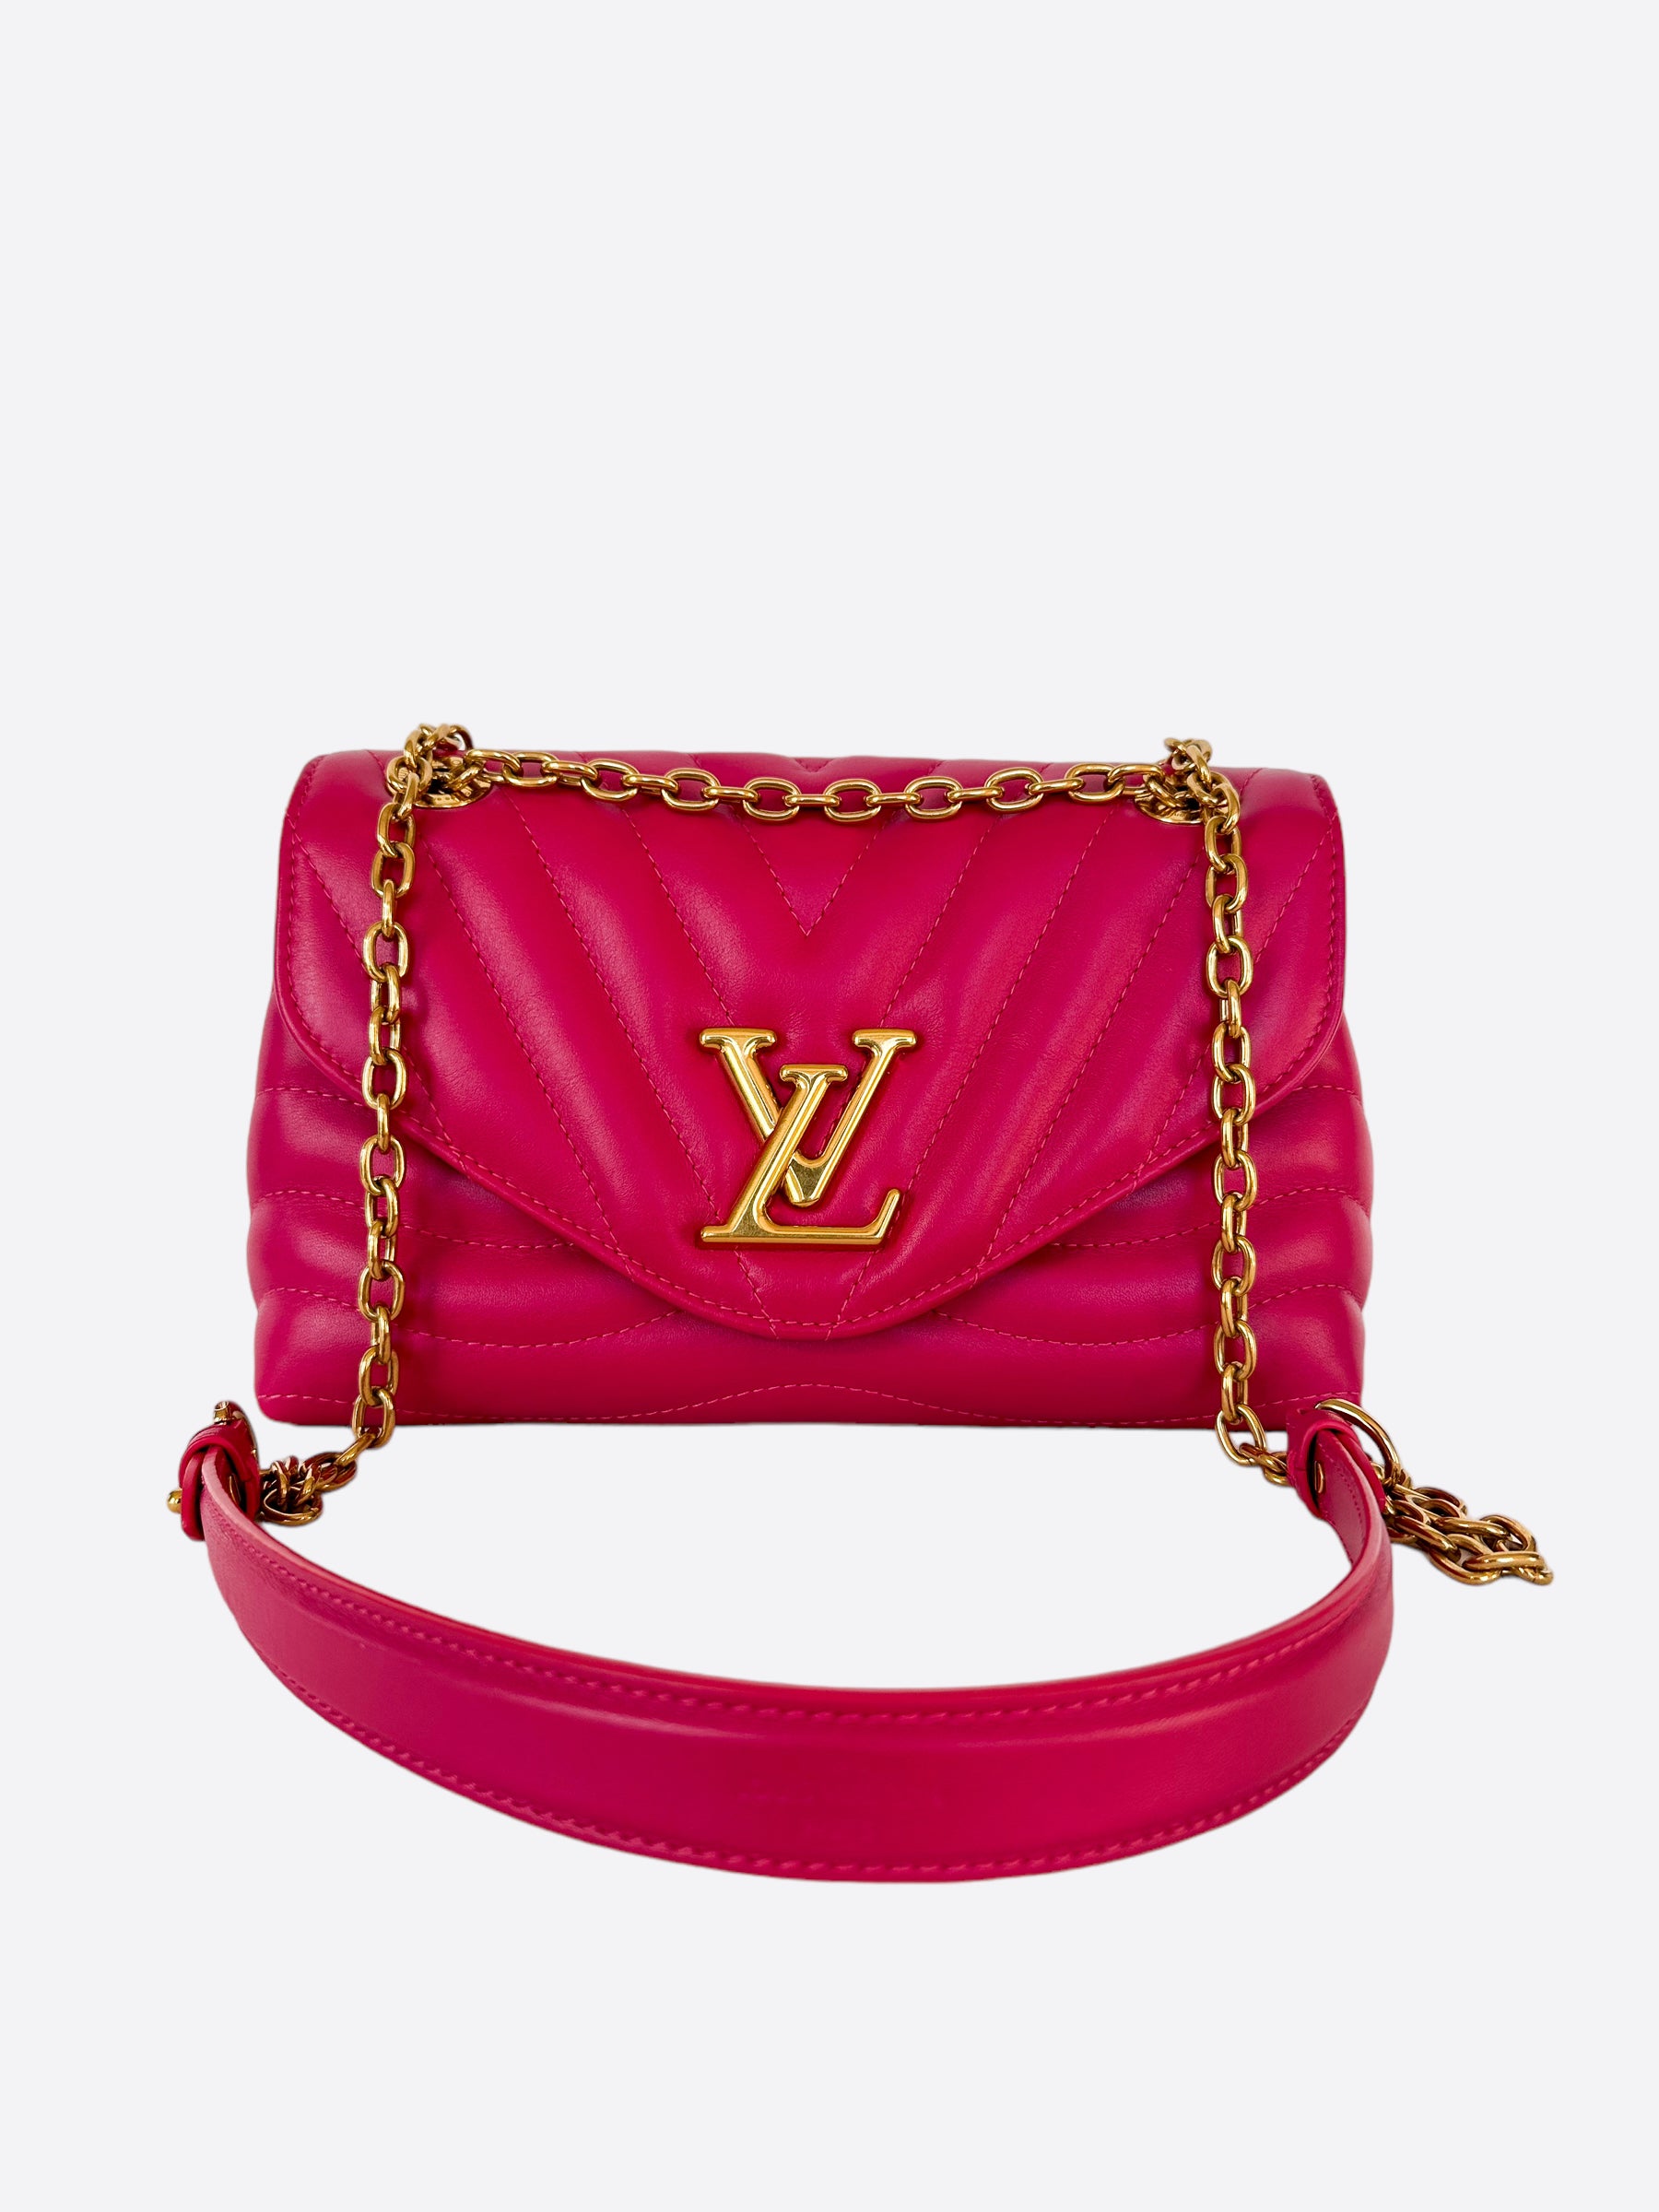 Louis Vuitton Tourist VS Purist Tuffetage Denim Pants Red